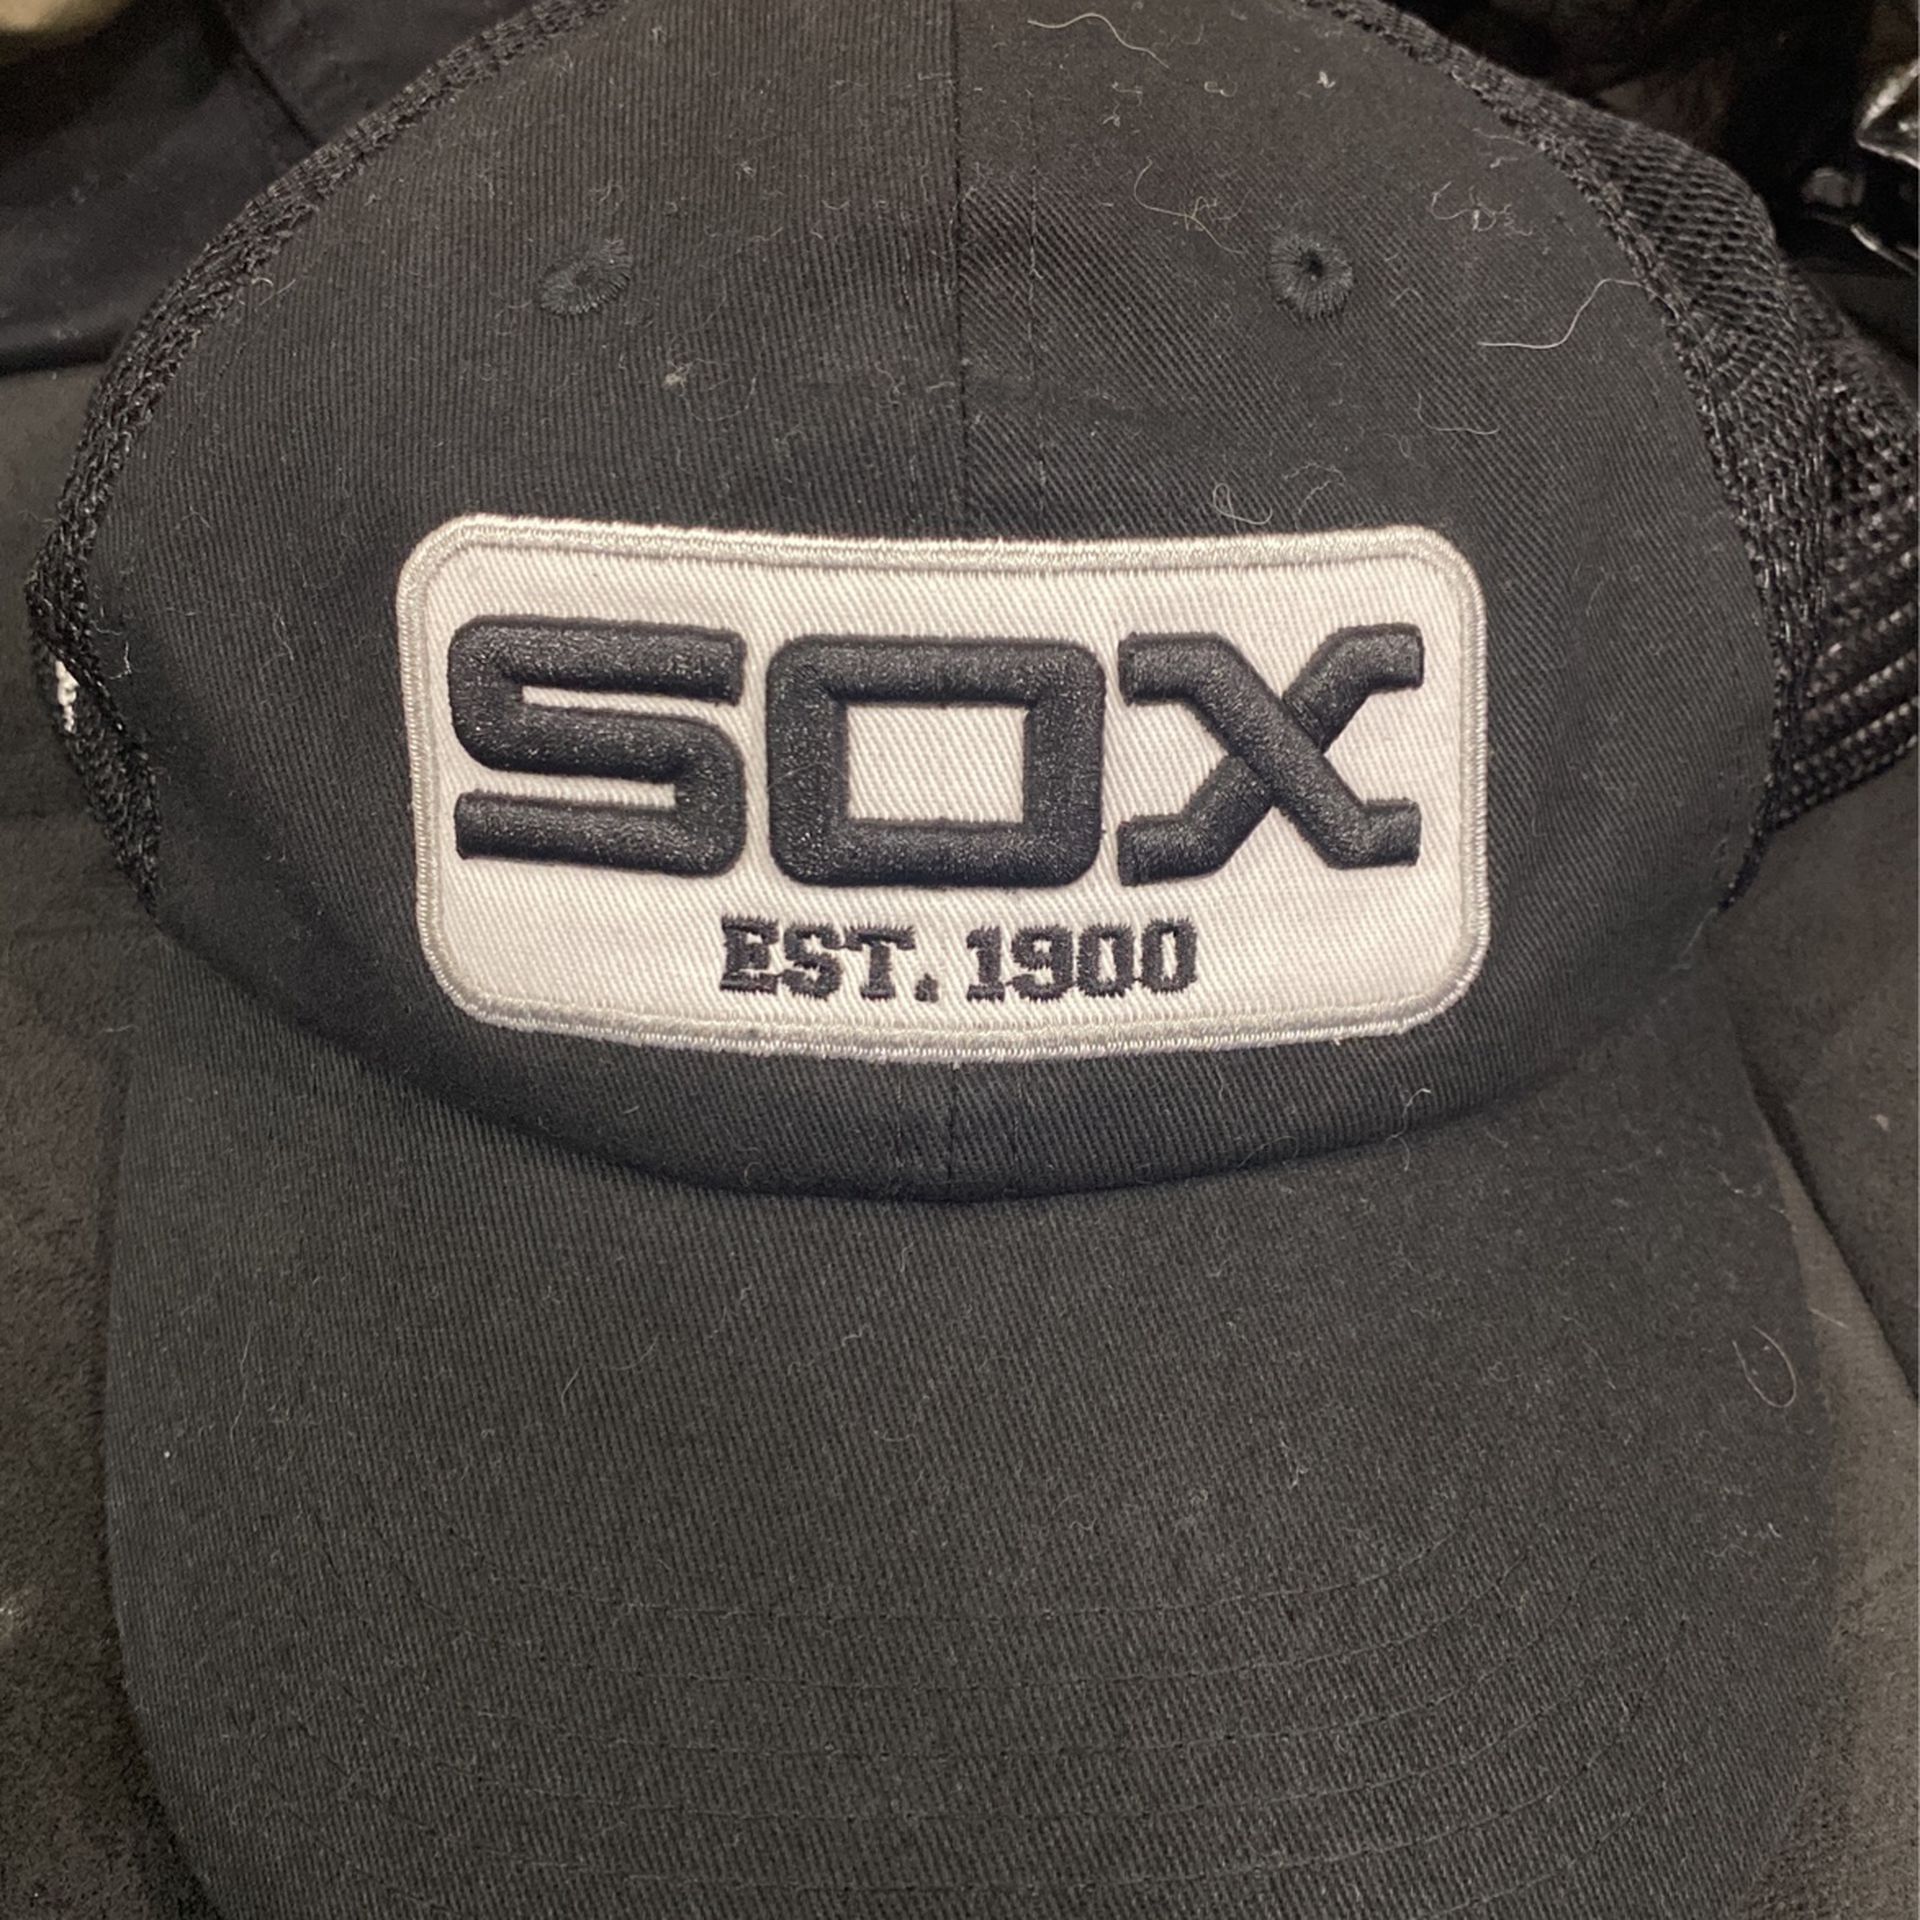 White Sox Hat